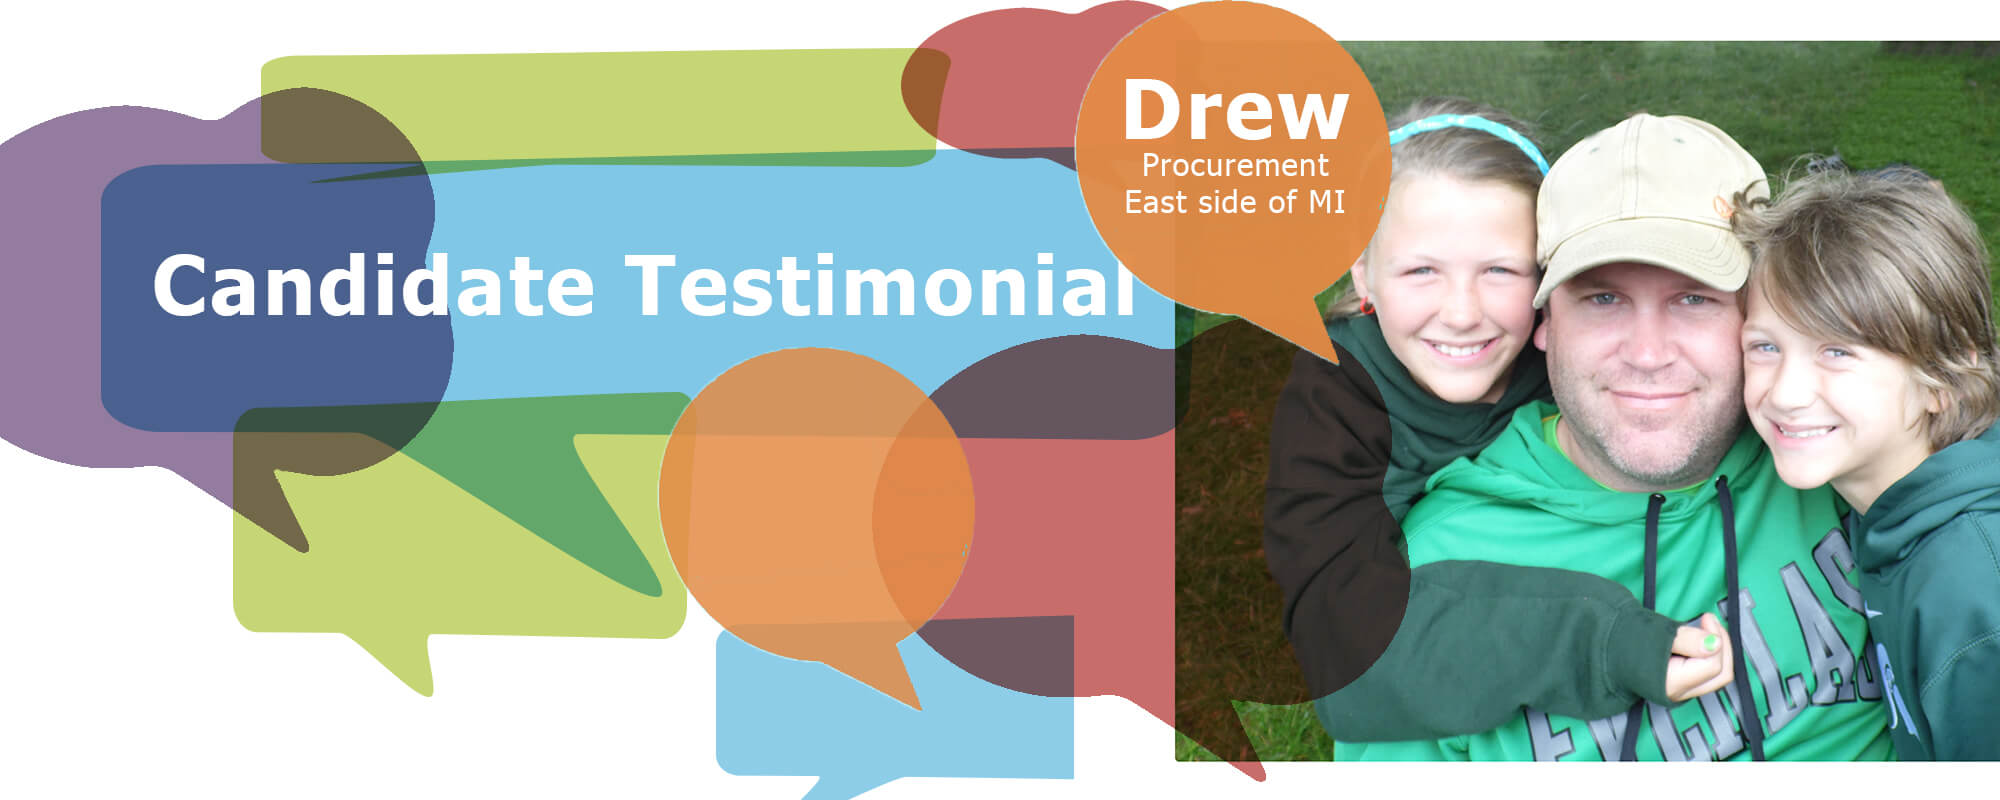 Candidate Testimonial: Drew